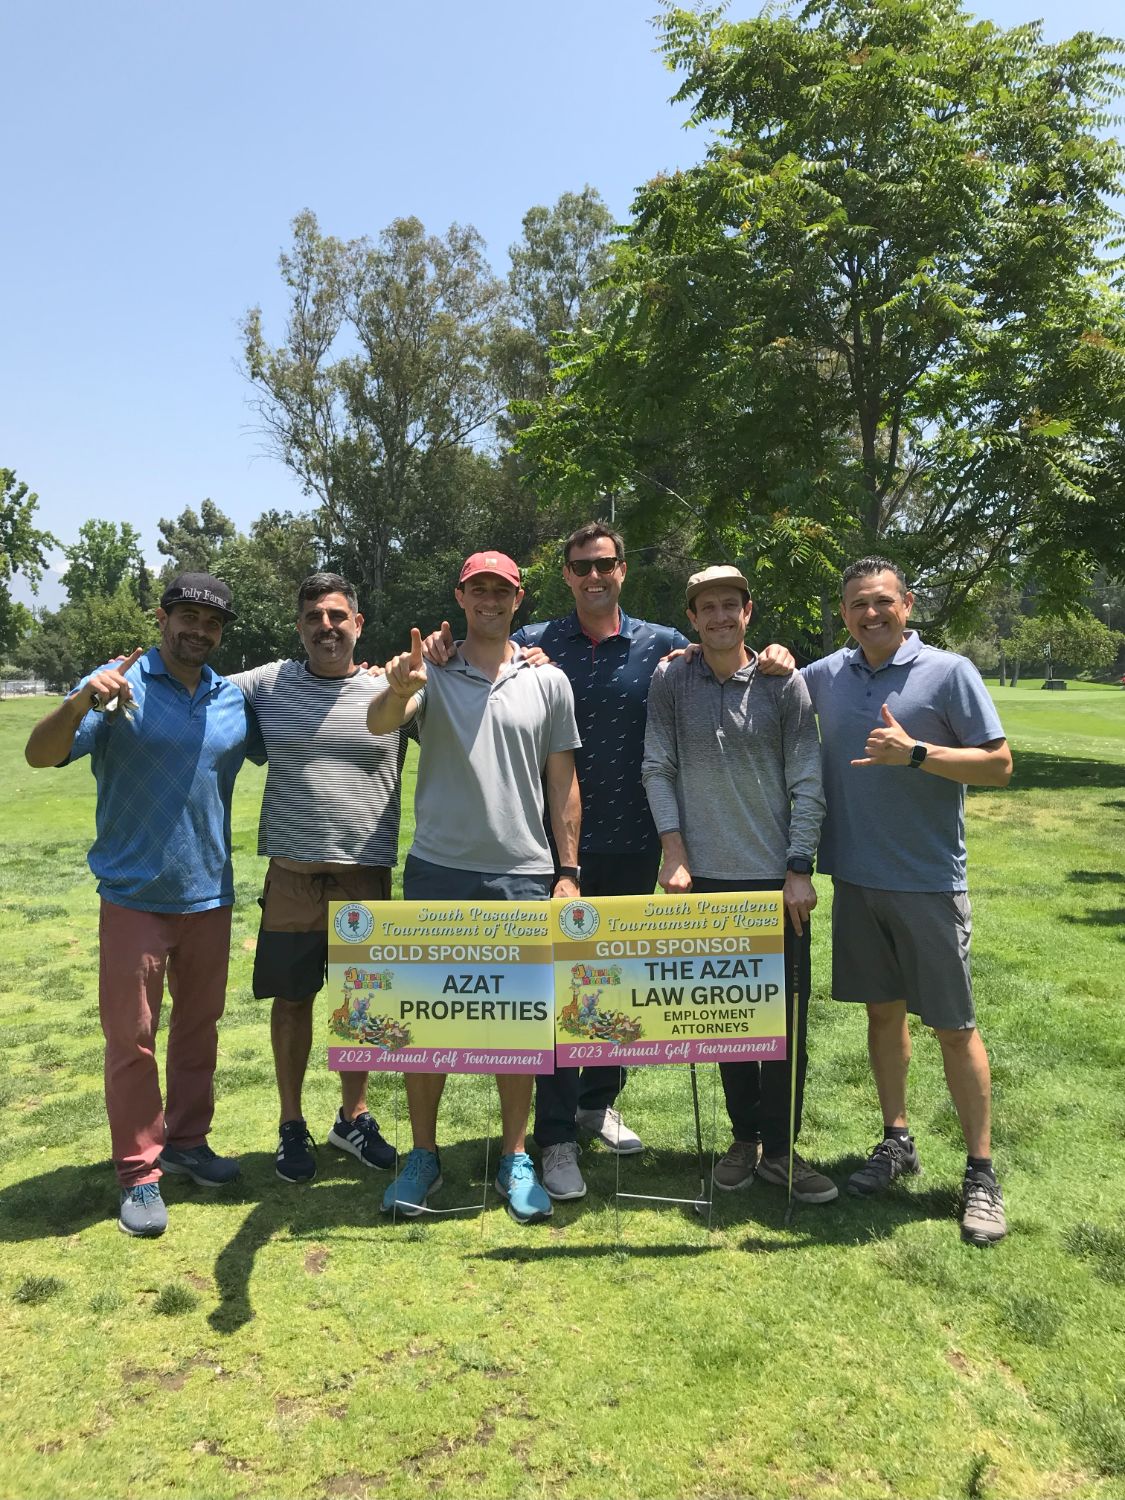 PHOTO: The Azat Companies | The South Pasadenan | The Gold Sponsor Azat Team at the tournament consisted of Nathan Bennet, Aram Yashu, Issa Azat, Mike Azat, Joseph Hogan, and Arturo Sandoval.